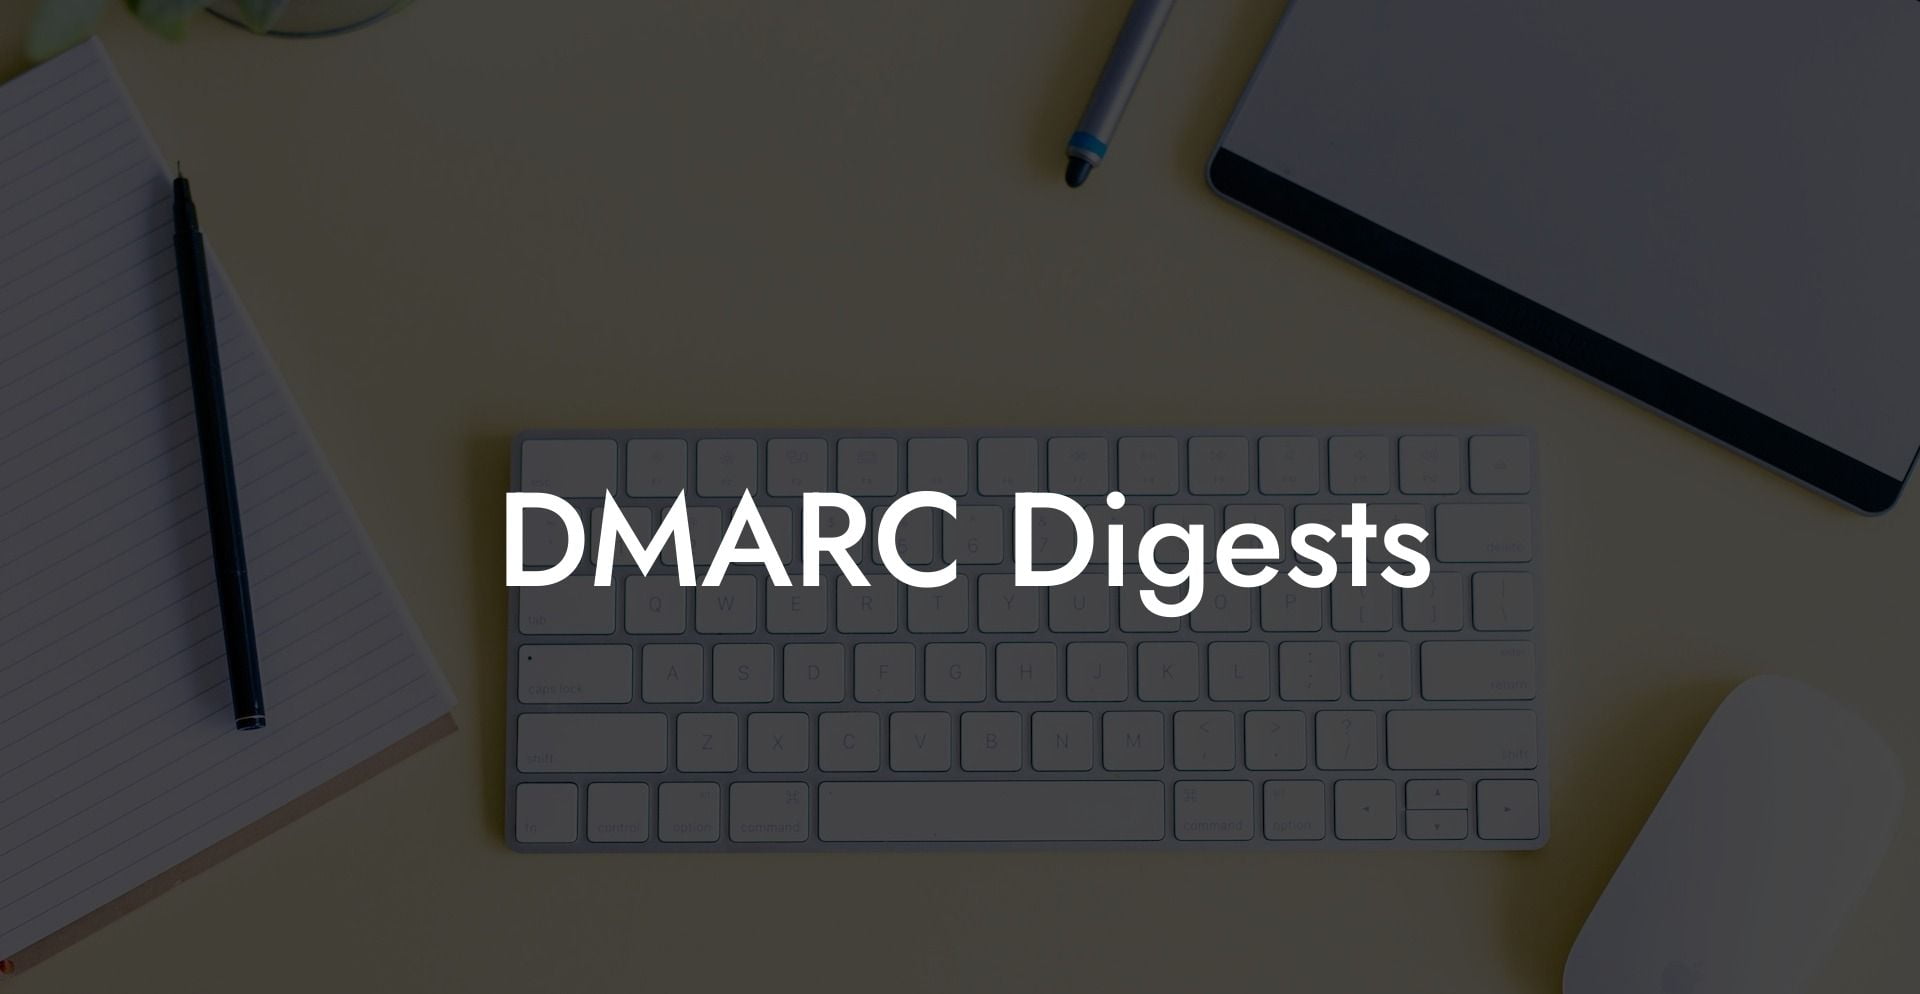 DMARC Digests